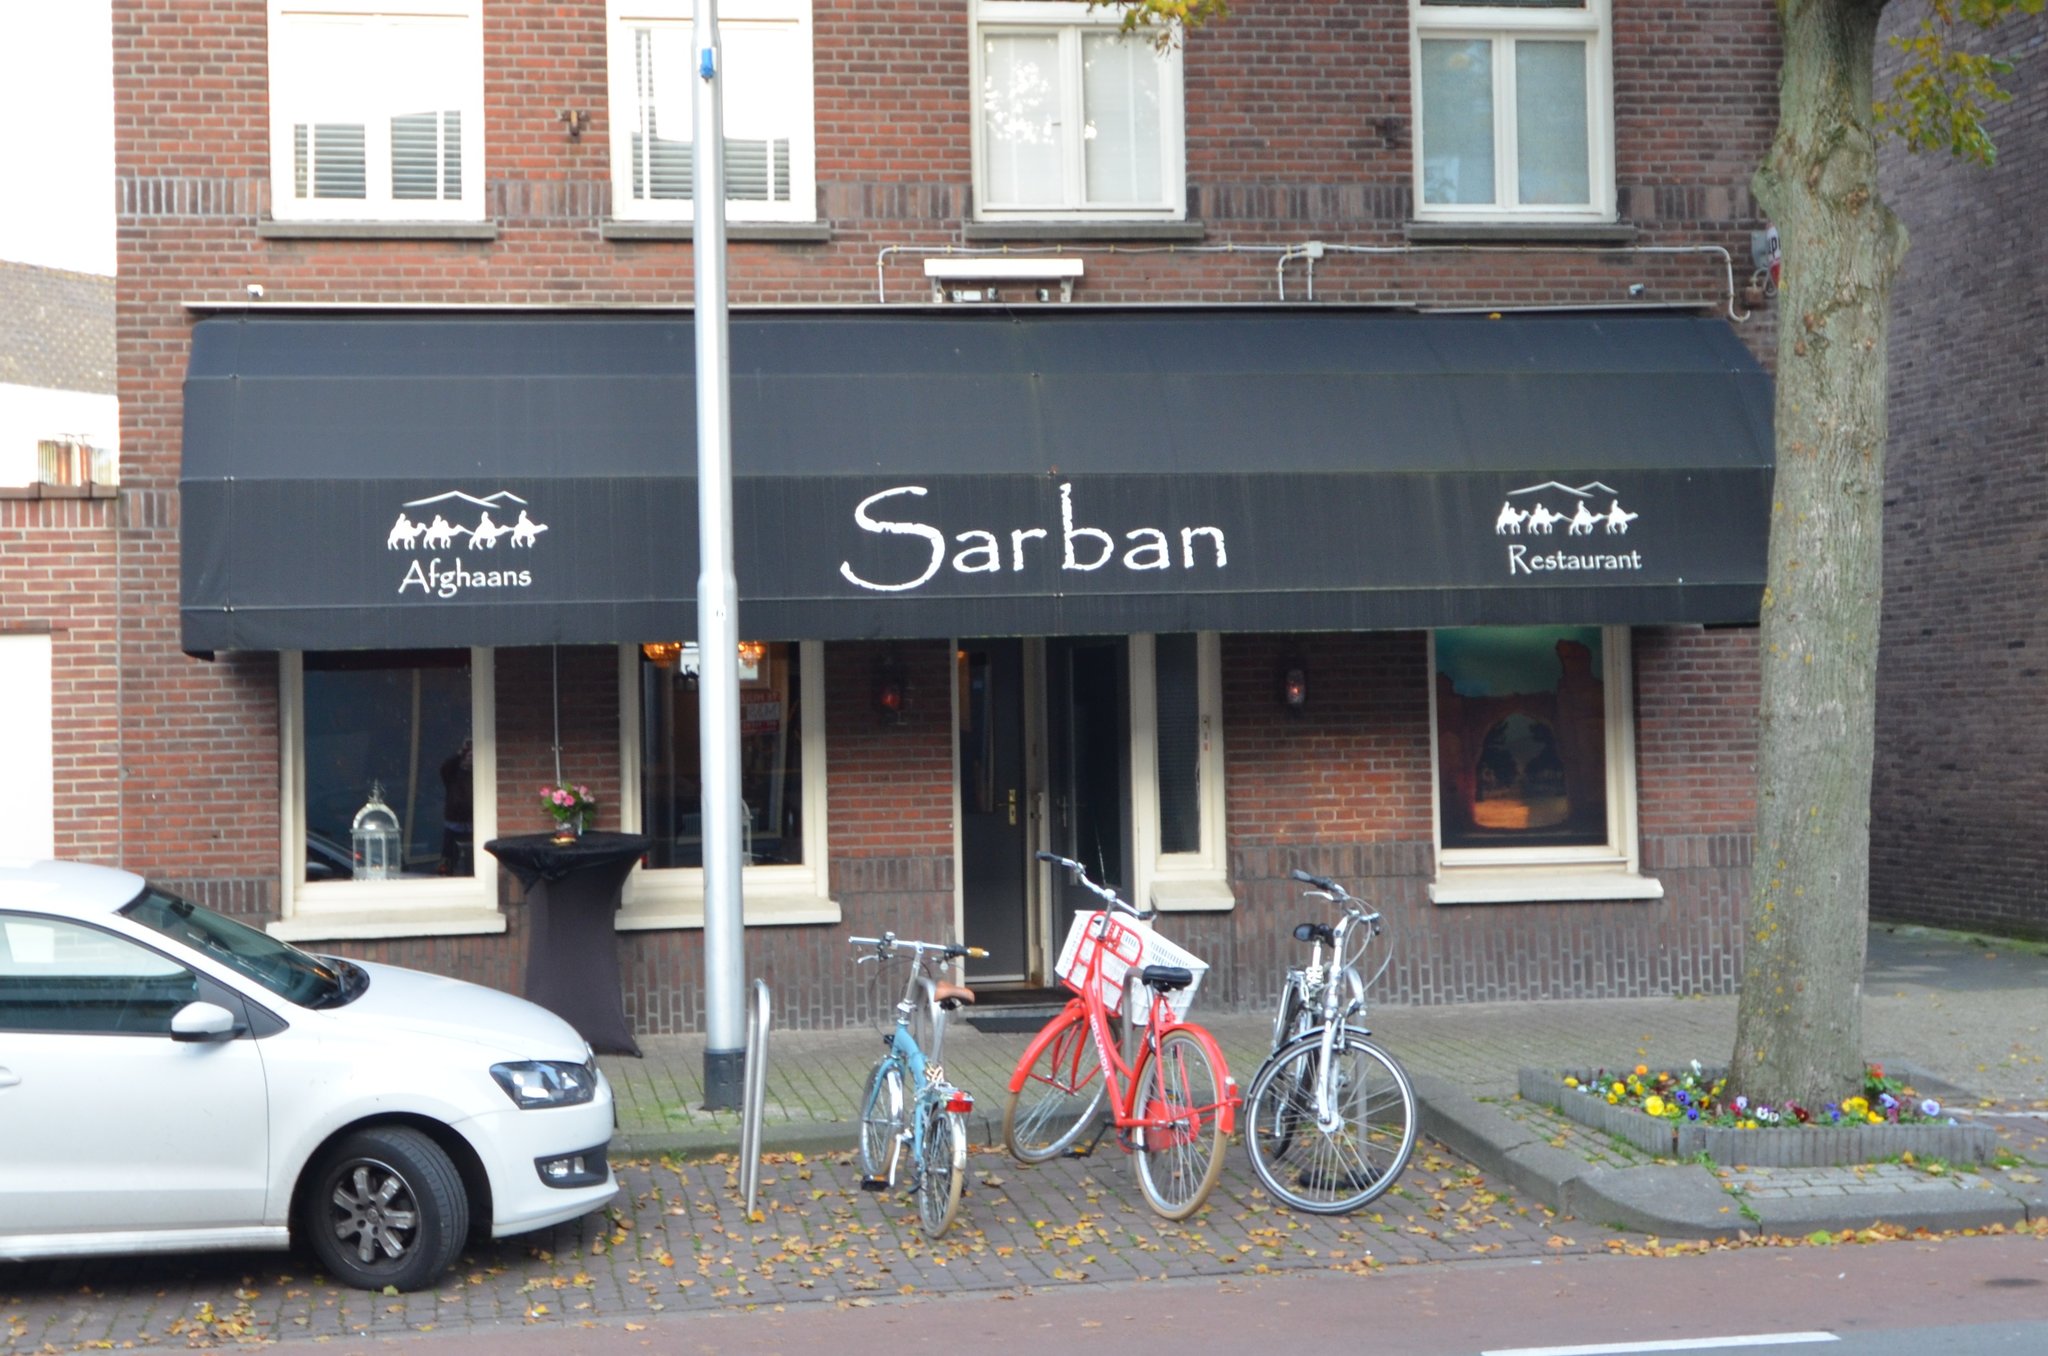 Sarban